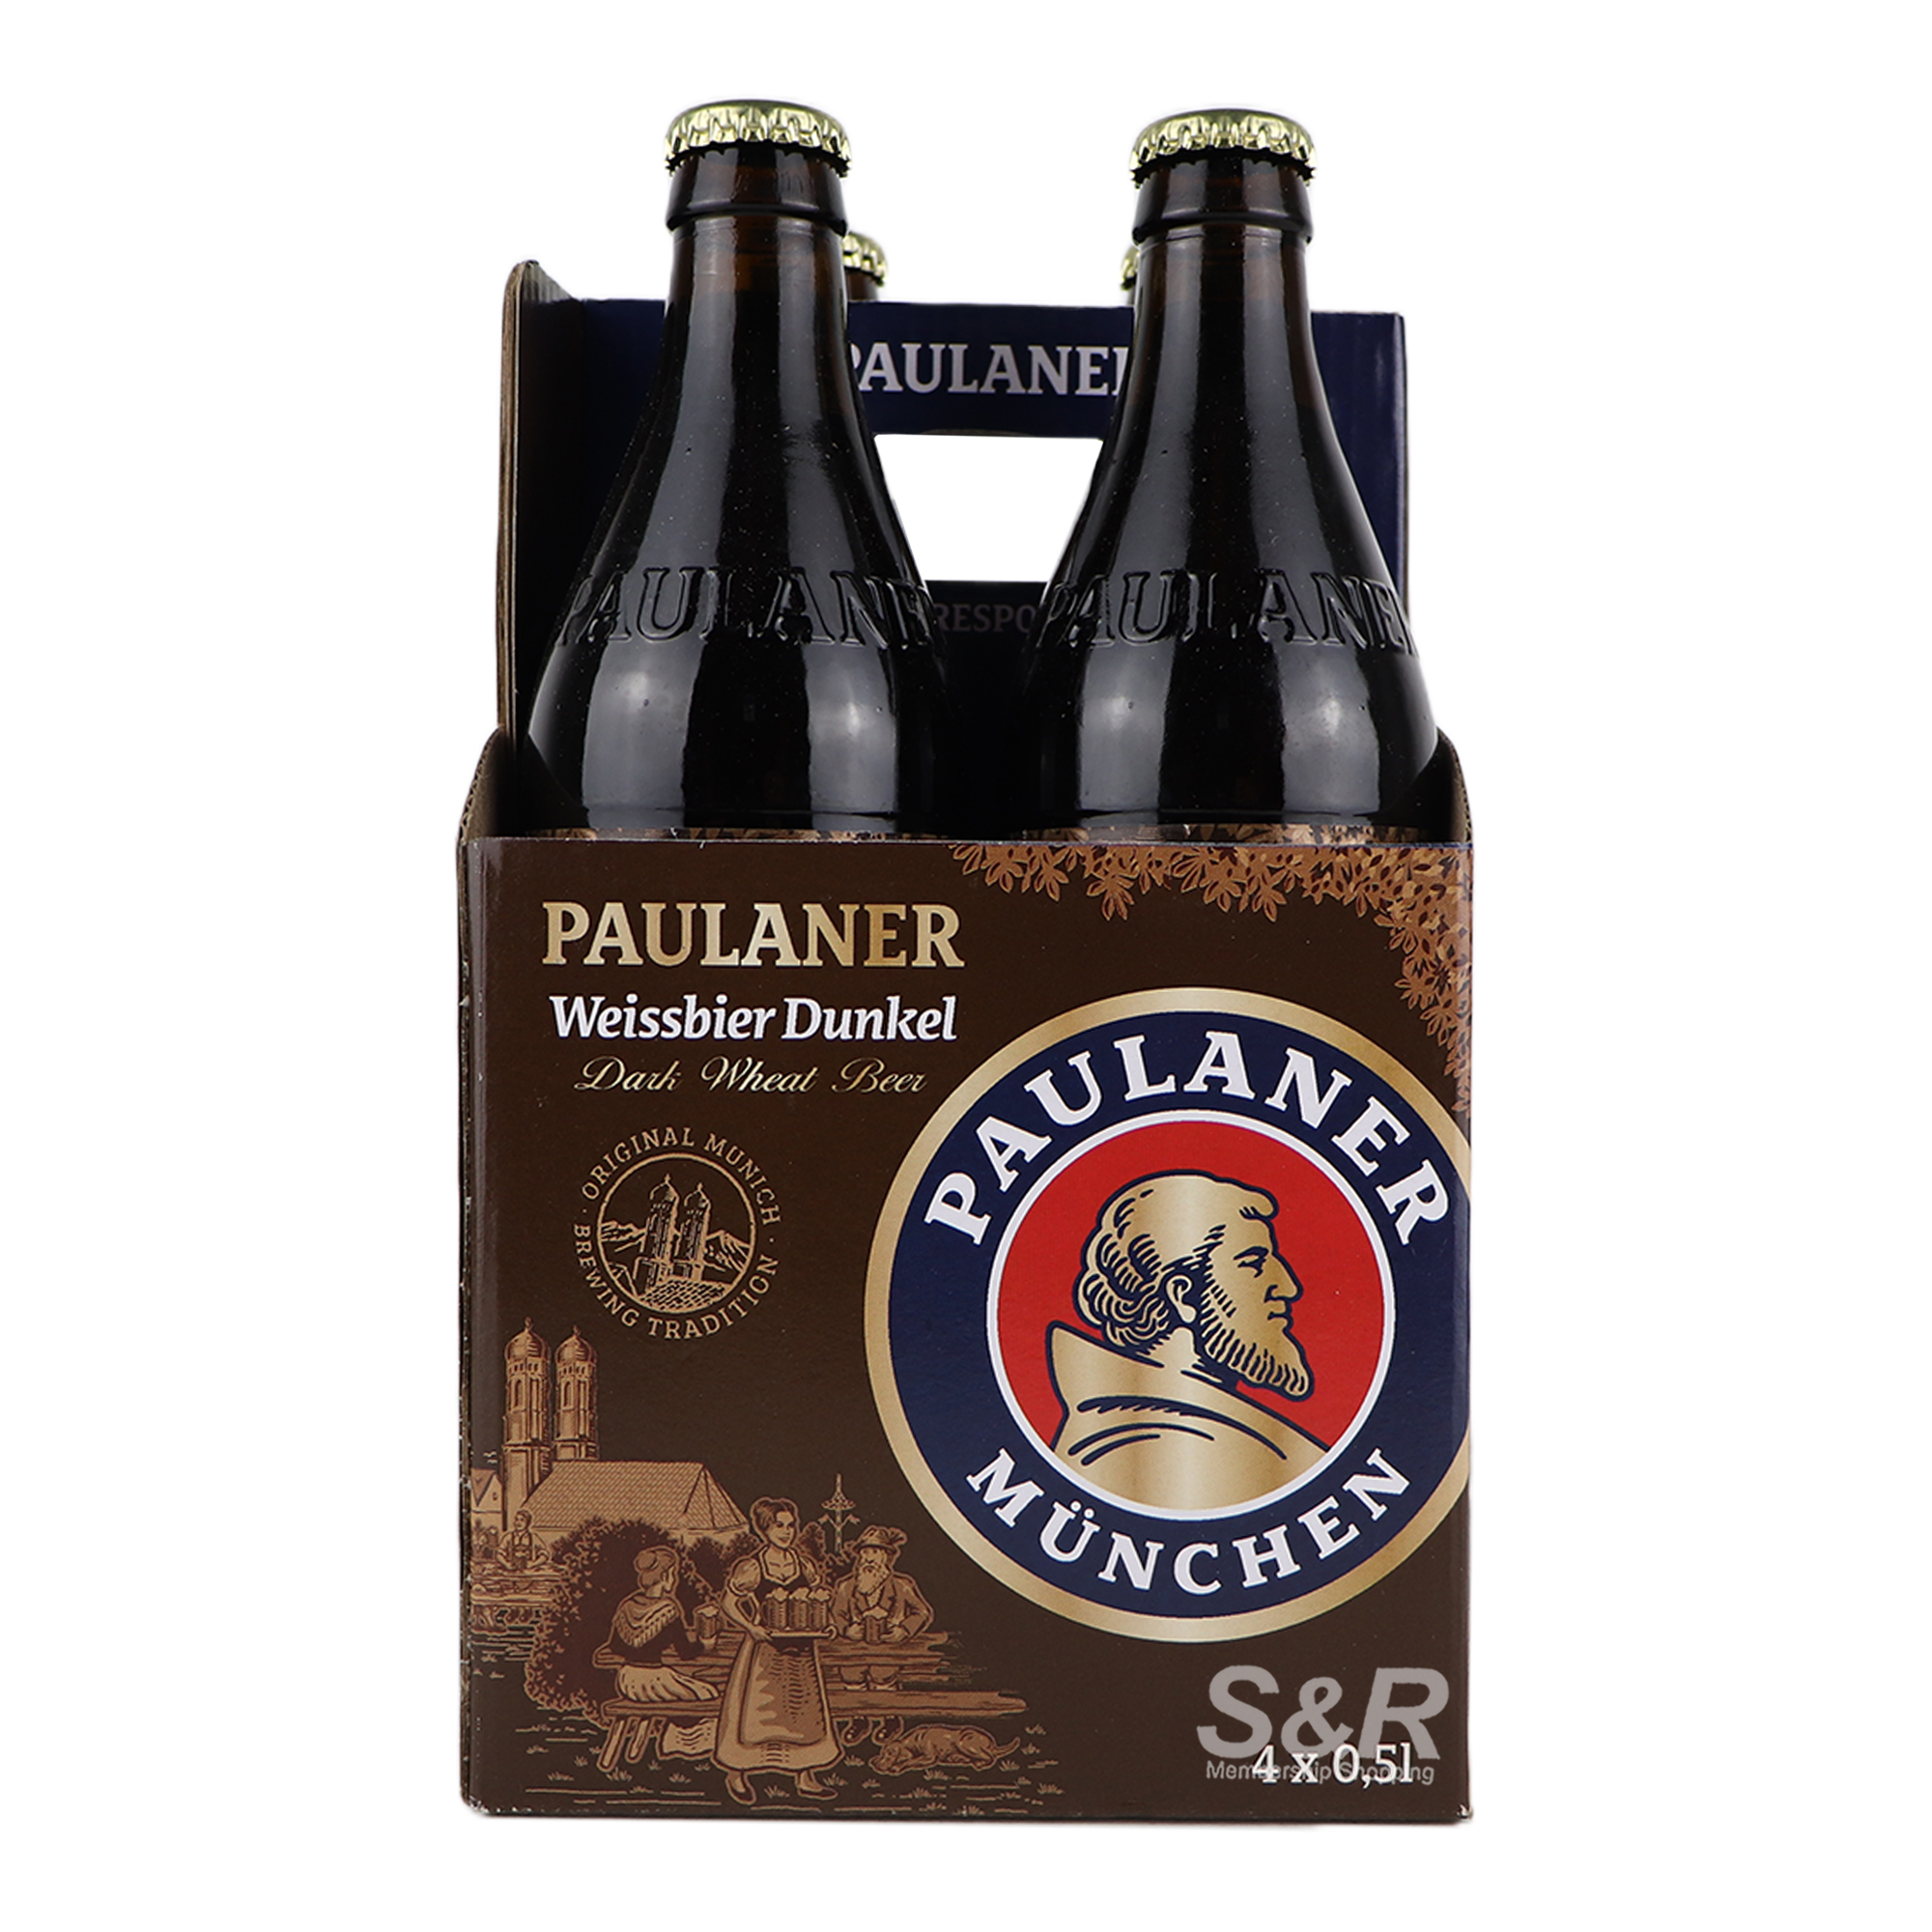 Paulaner Weissbier Dunkel 4 Beer Bottles